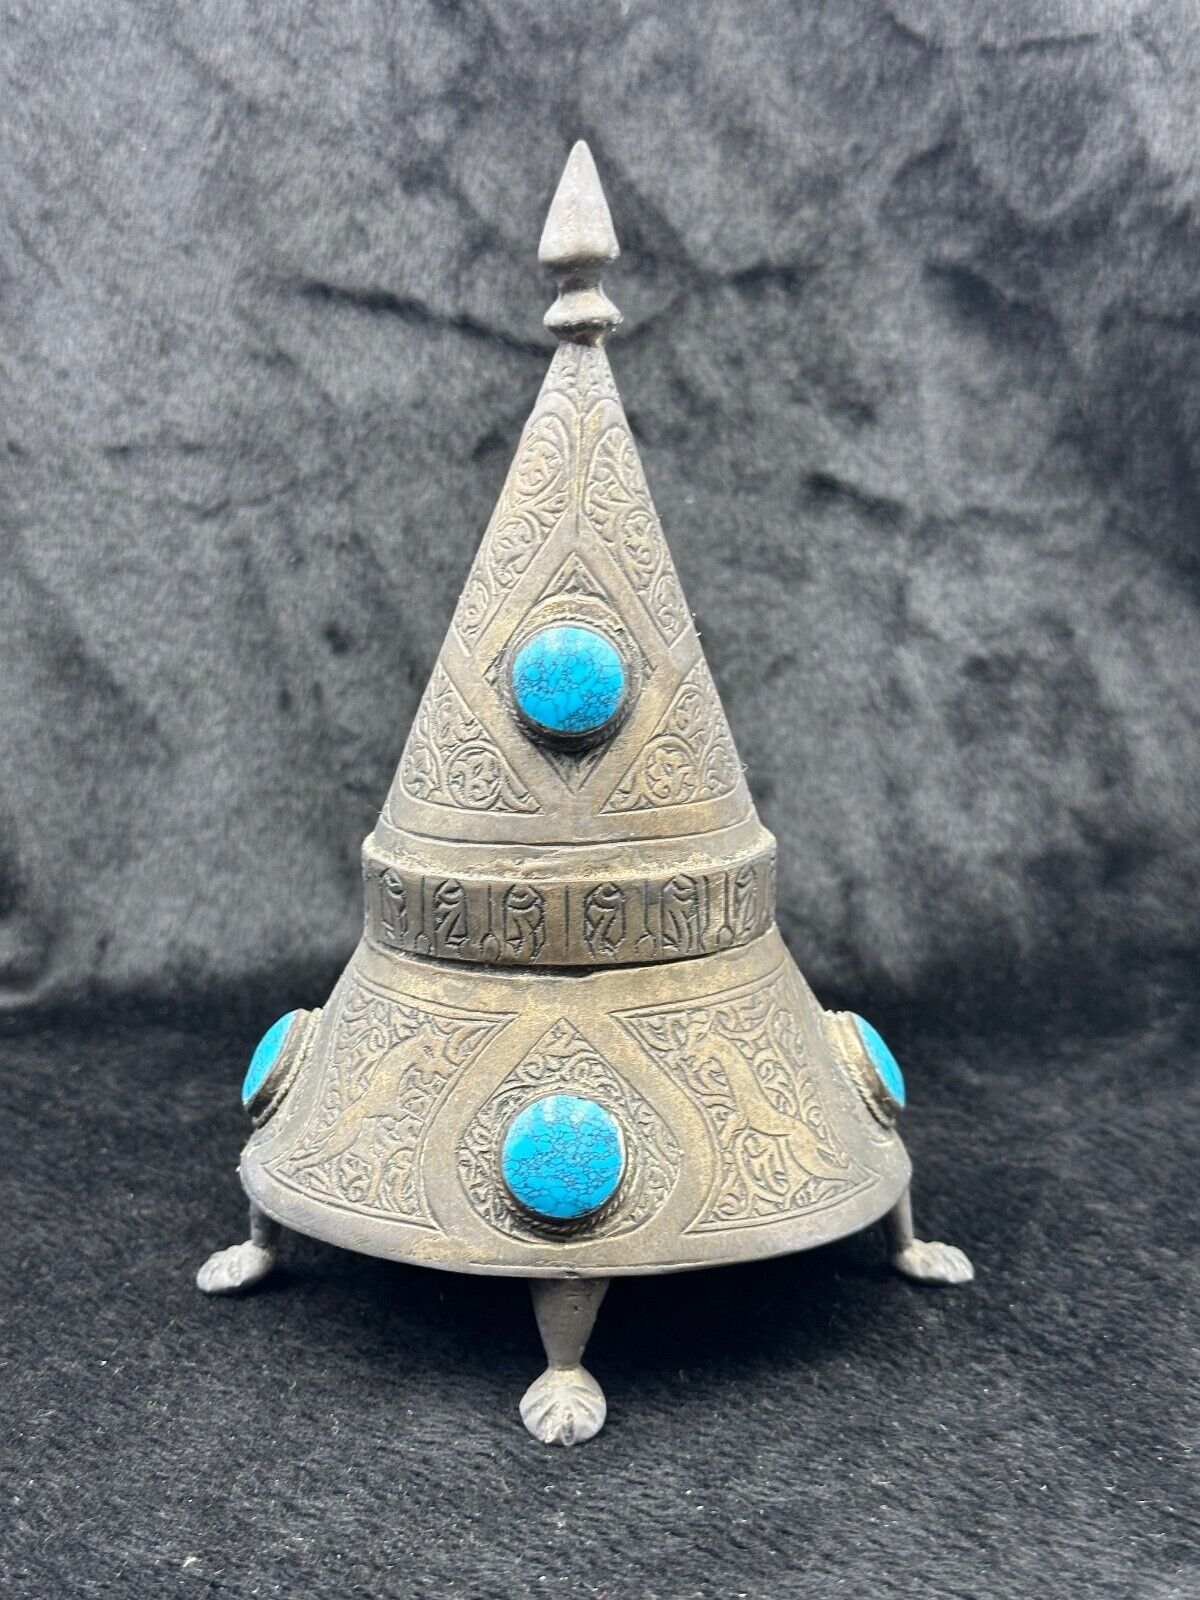 Antique Islamic White Metal Box Museum Quality Depicting Art & Turquoise Stone